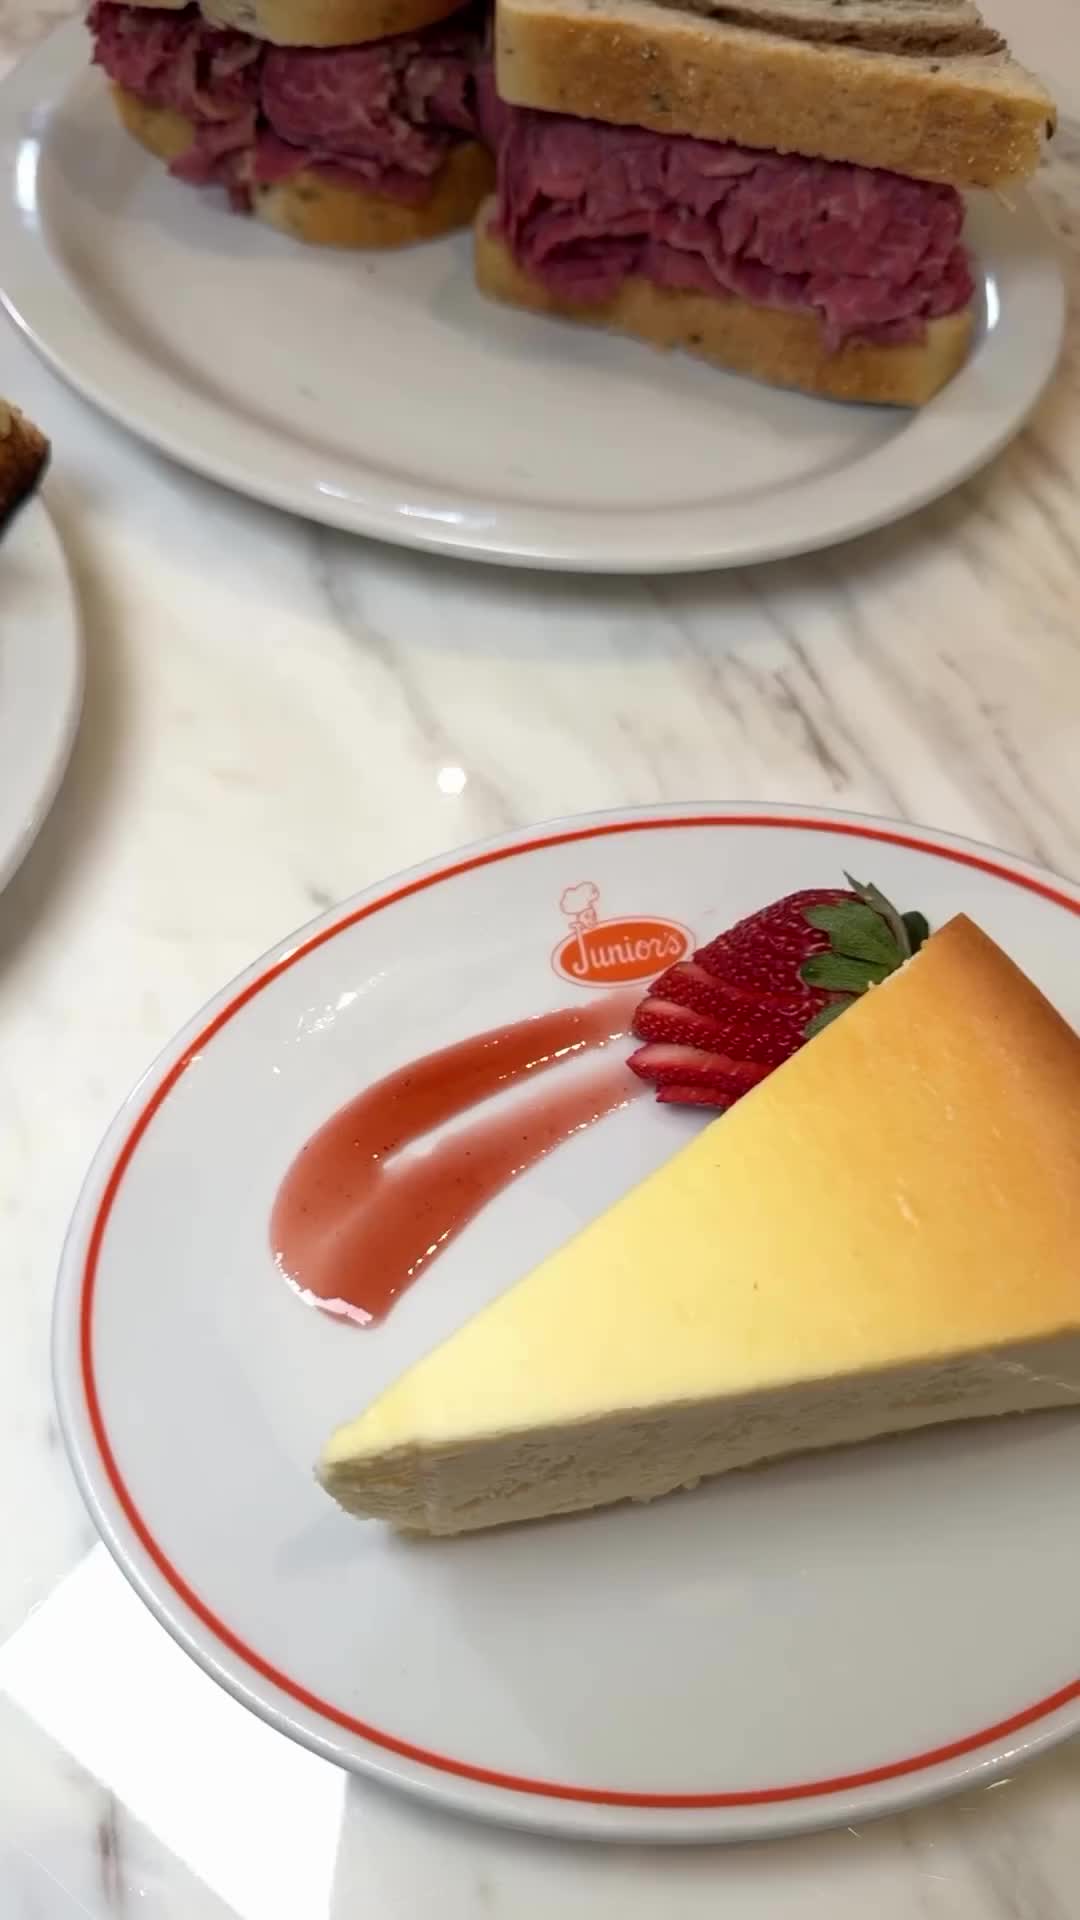 Discover Junior's Cheesecake at Resorts World LV